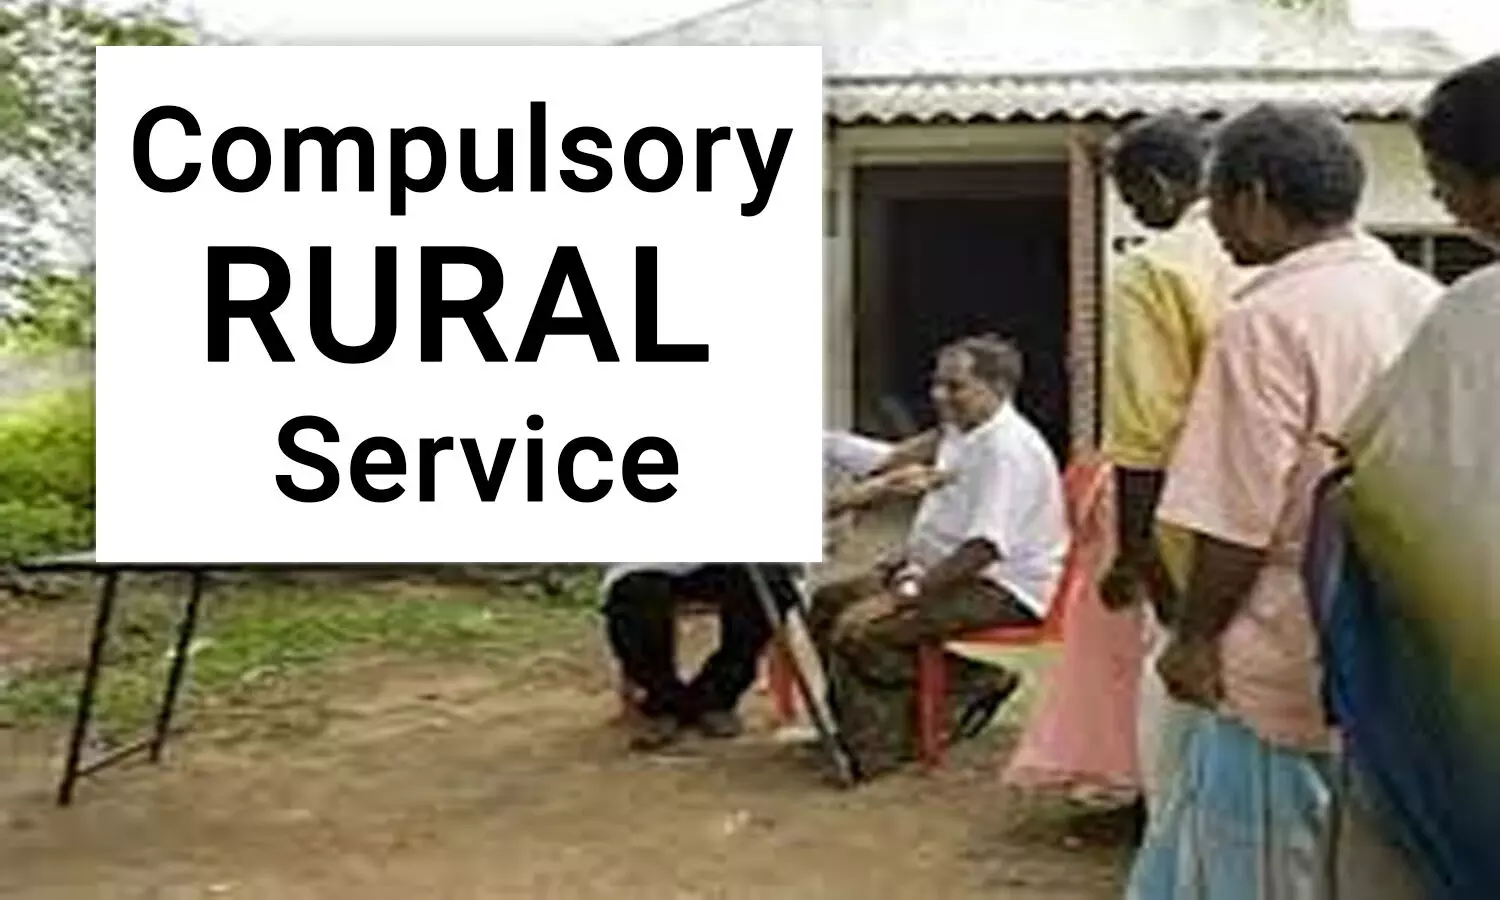 One-year Rural Service now mandatory for ALL MBBS graduates in Karnataka